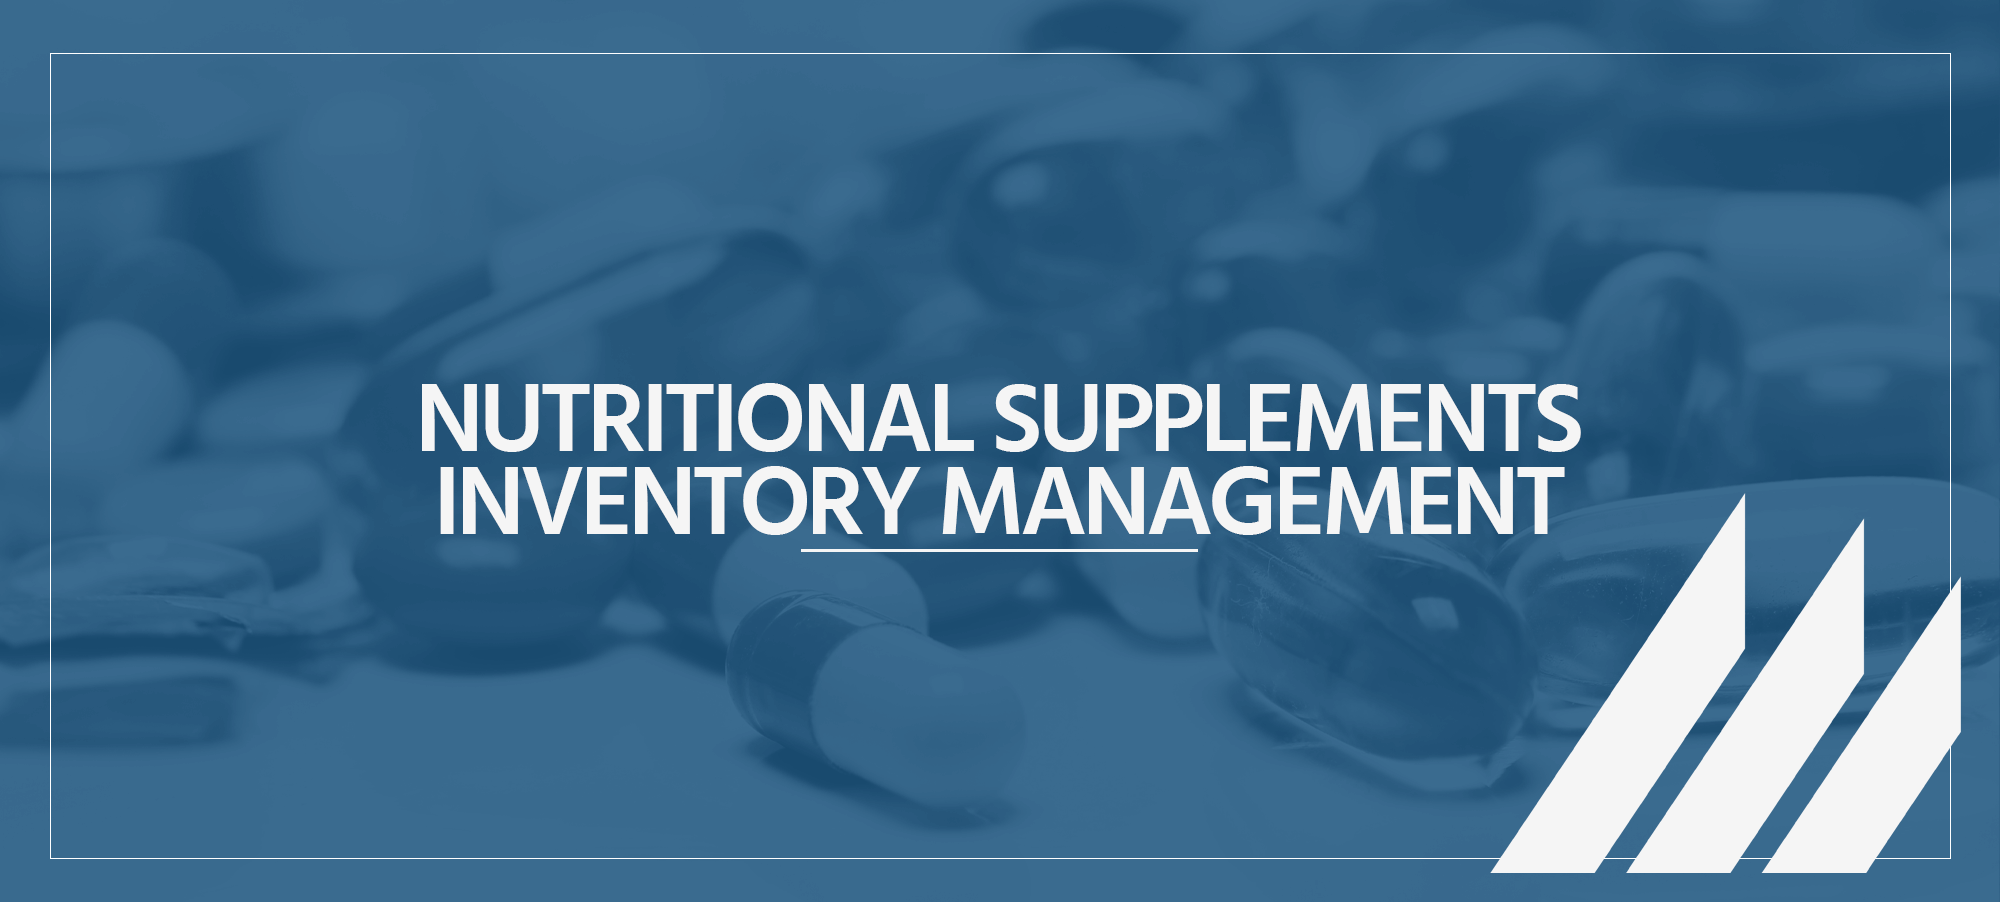 Nutritional supplements inventory management header image